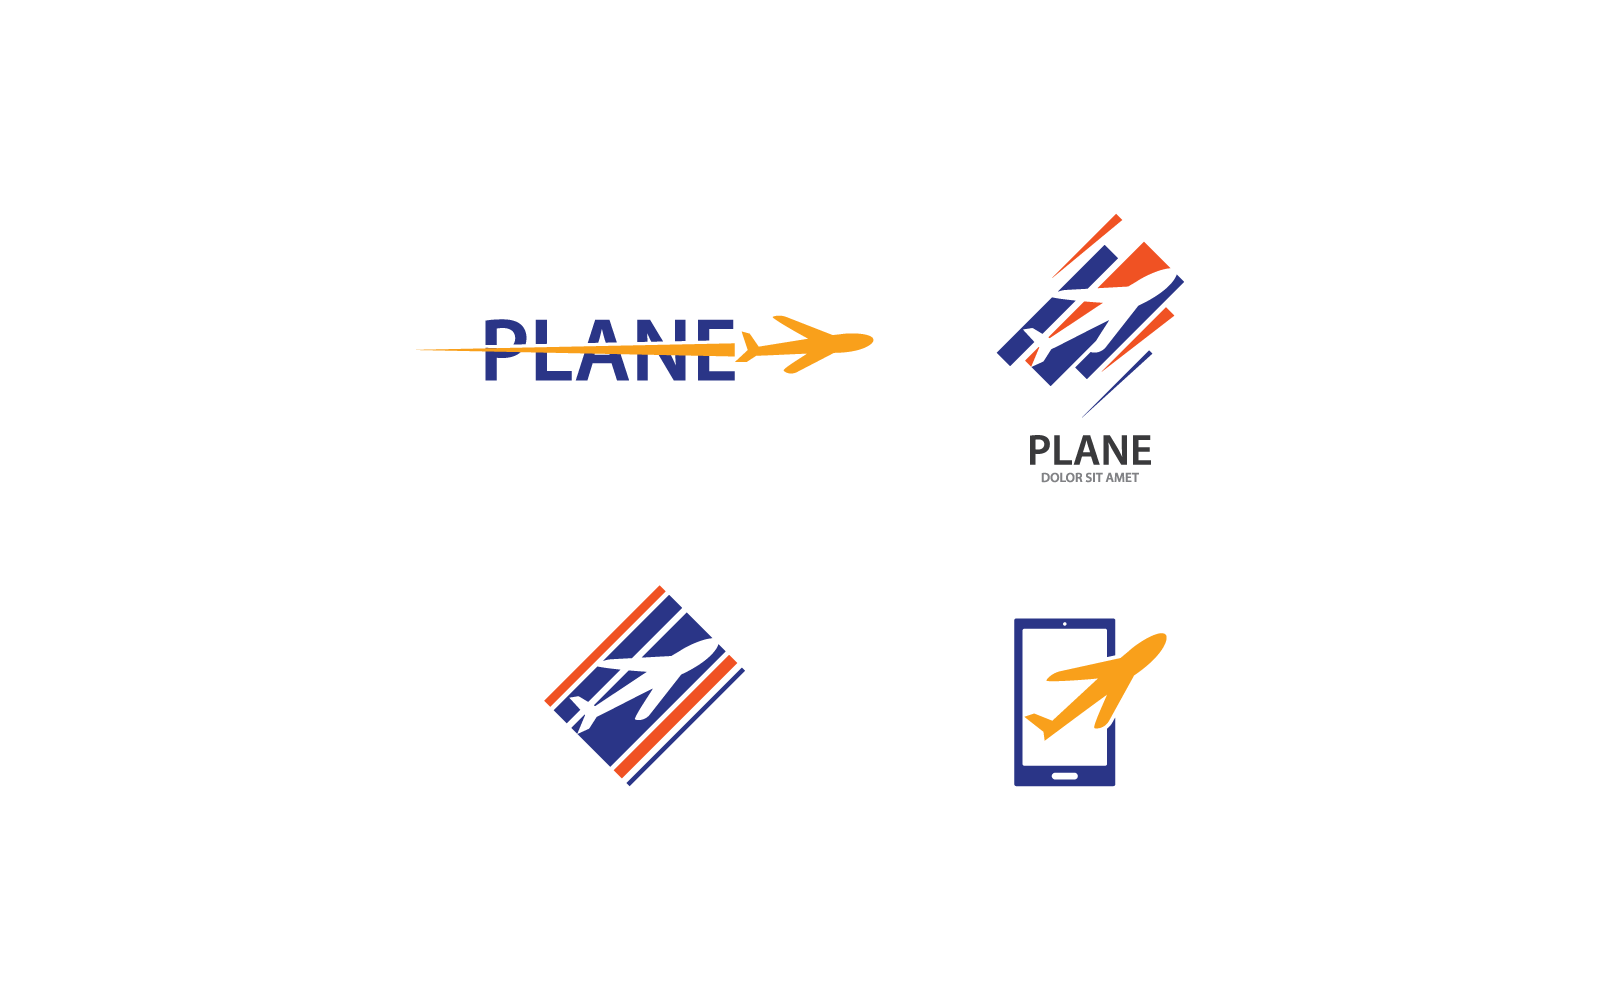 Plane Travel illustration logo vector template